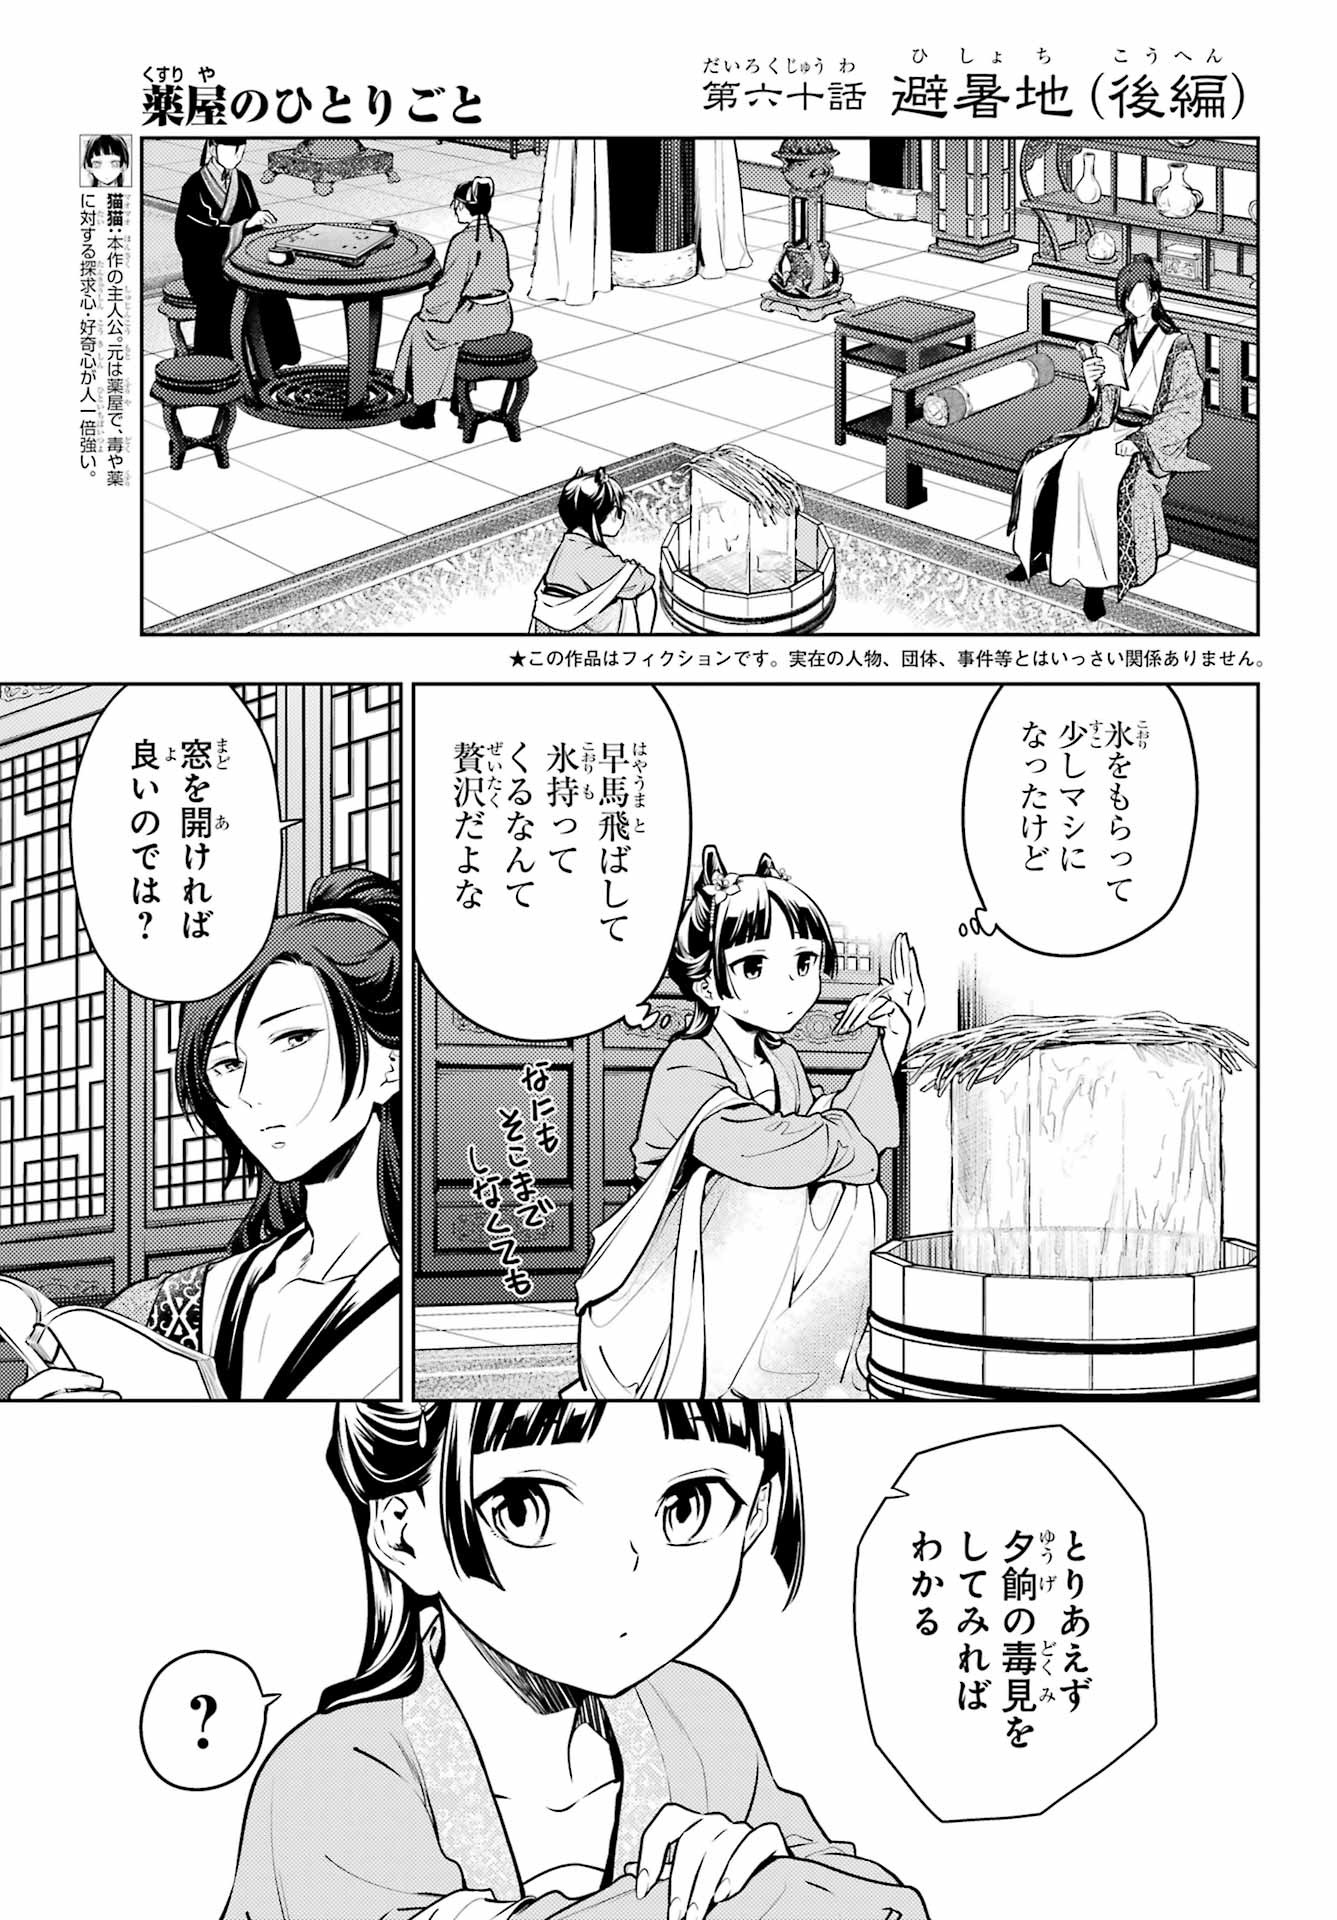 Kusuriya no Hitorigoto - Chapter 60-2 - Page 1